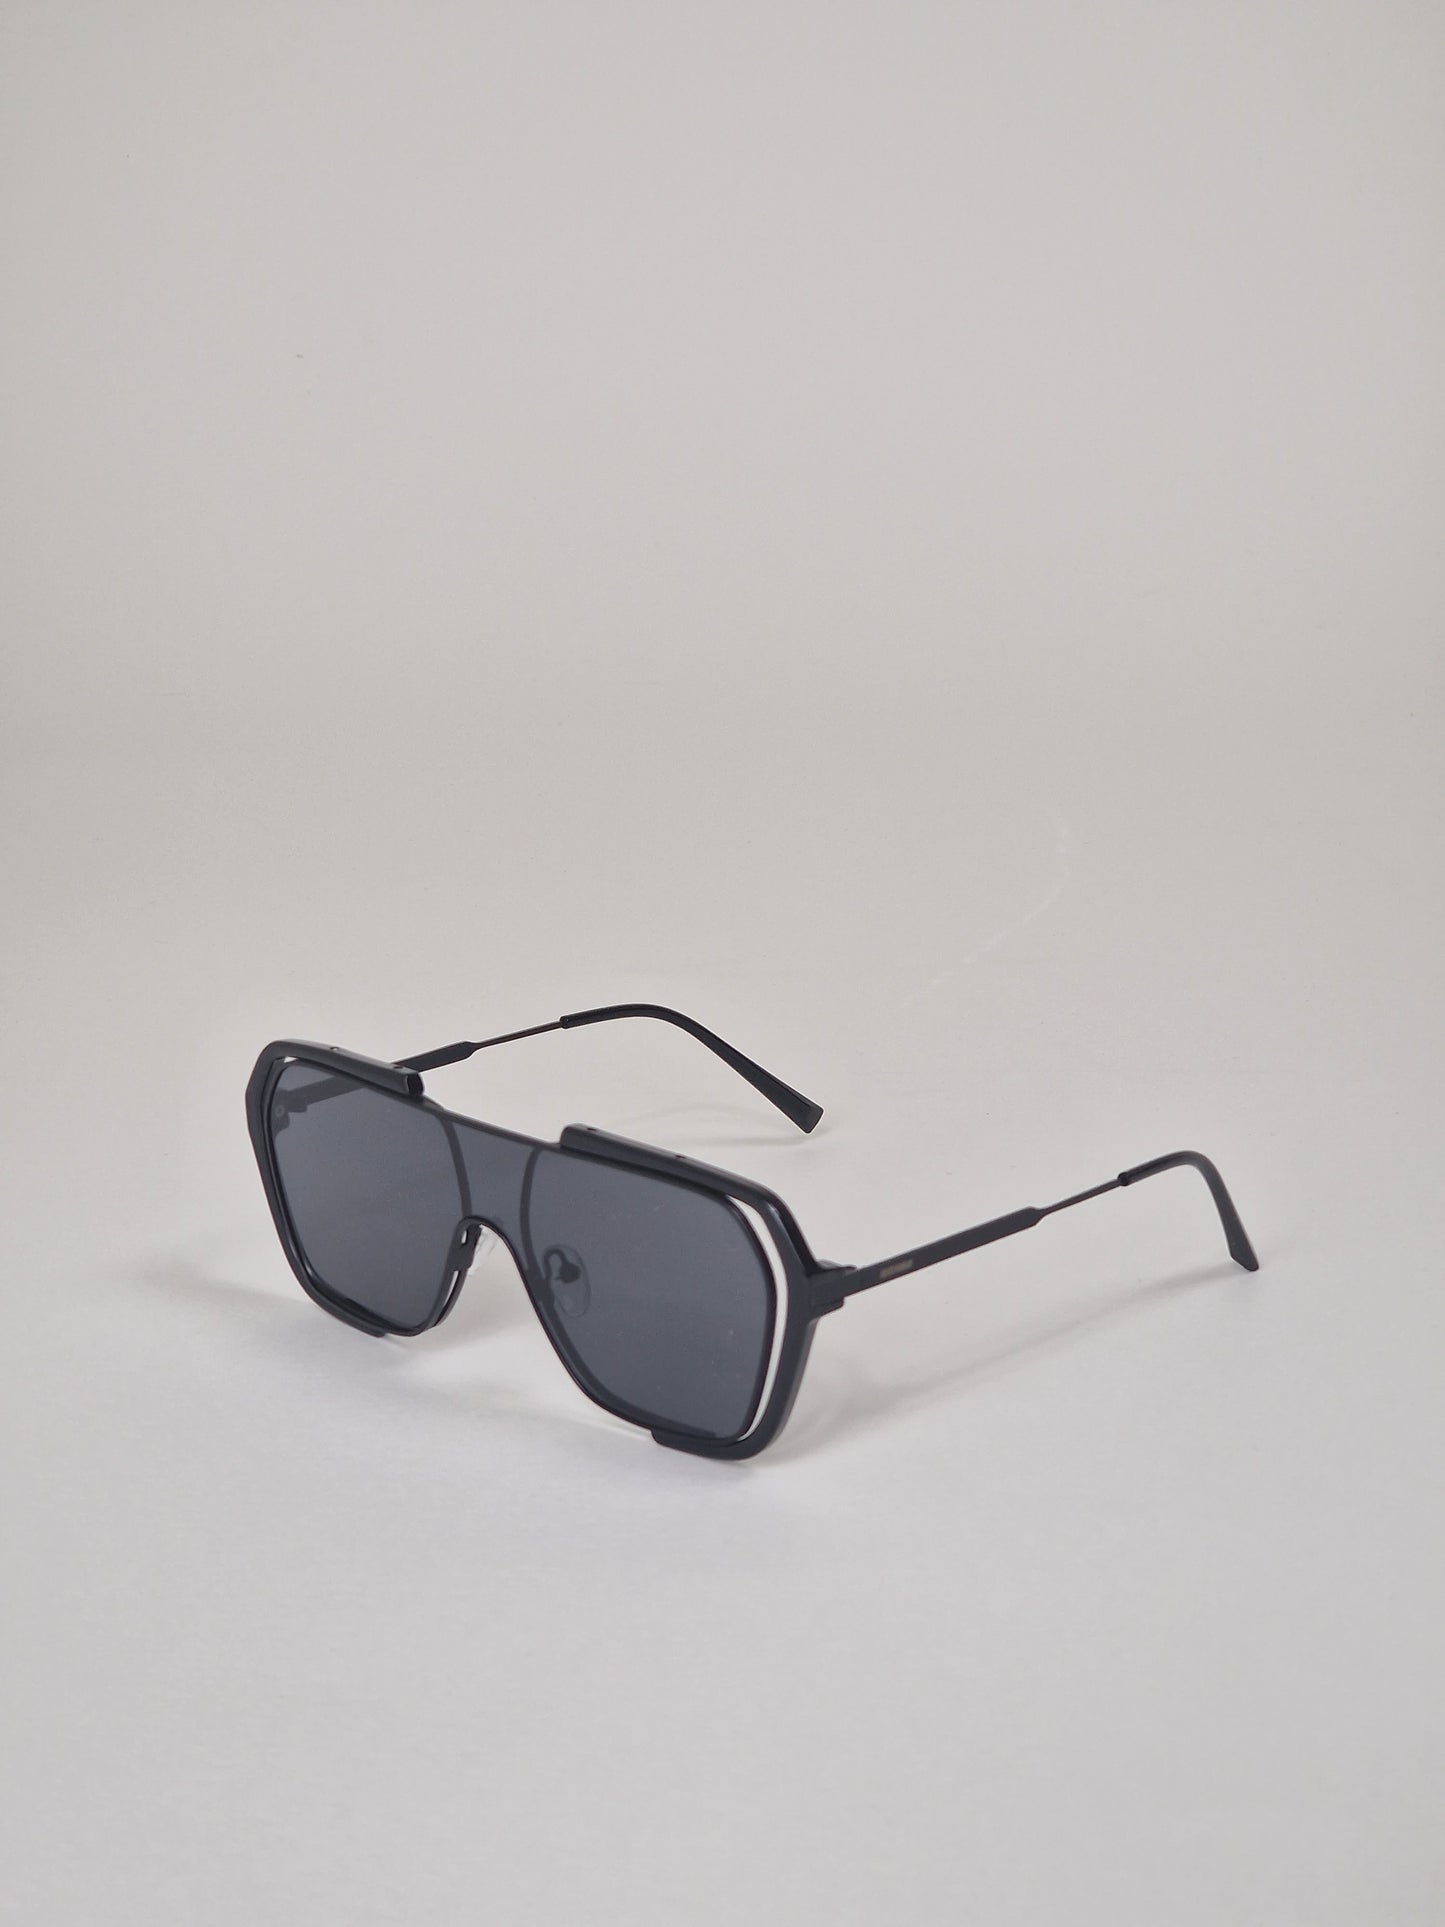 Sunglasses, model 27 - Black tinted.